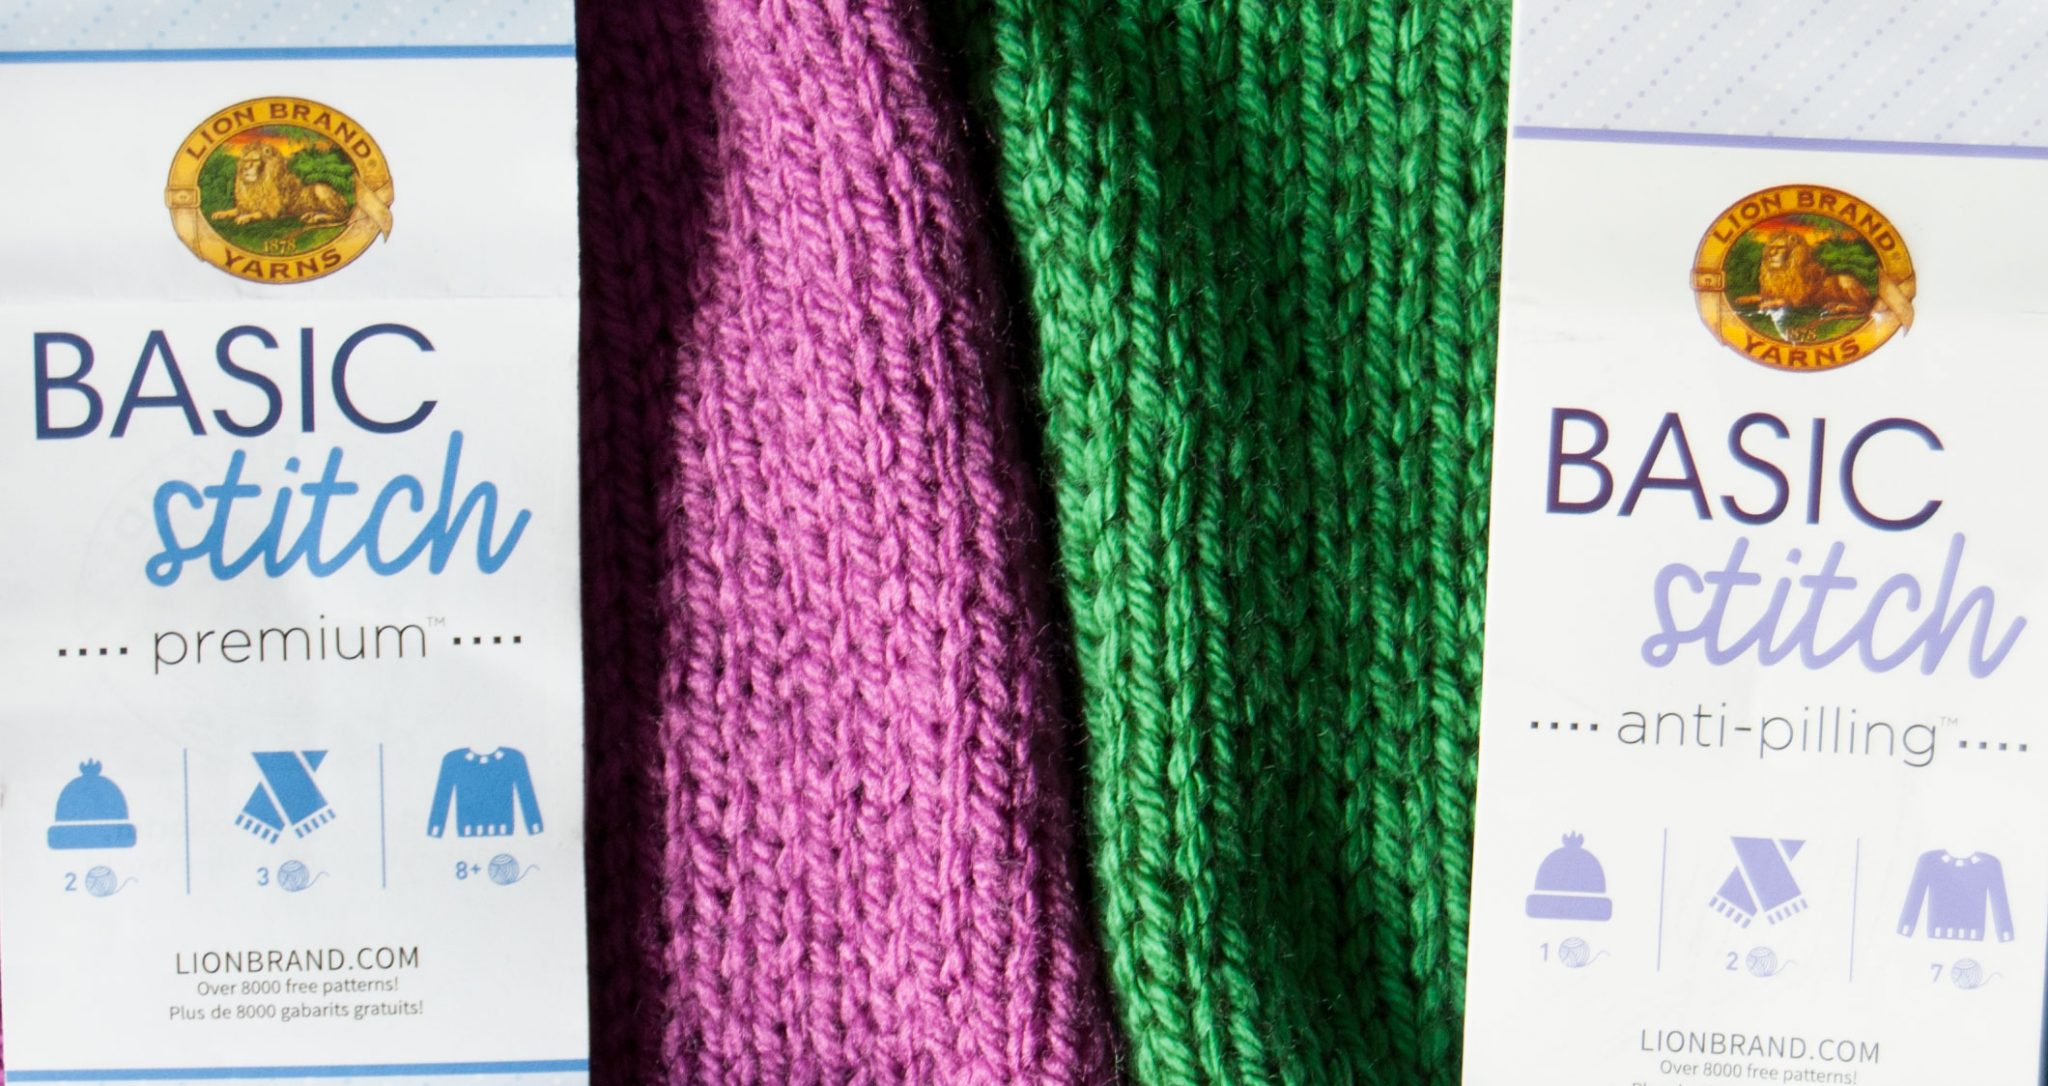 Lion Brand Basic Stitch Yarn: Premium vs Anti-Pilling - Budget Yarn Reviews